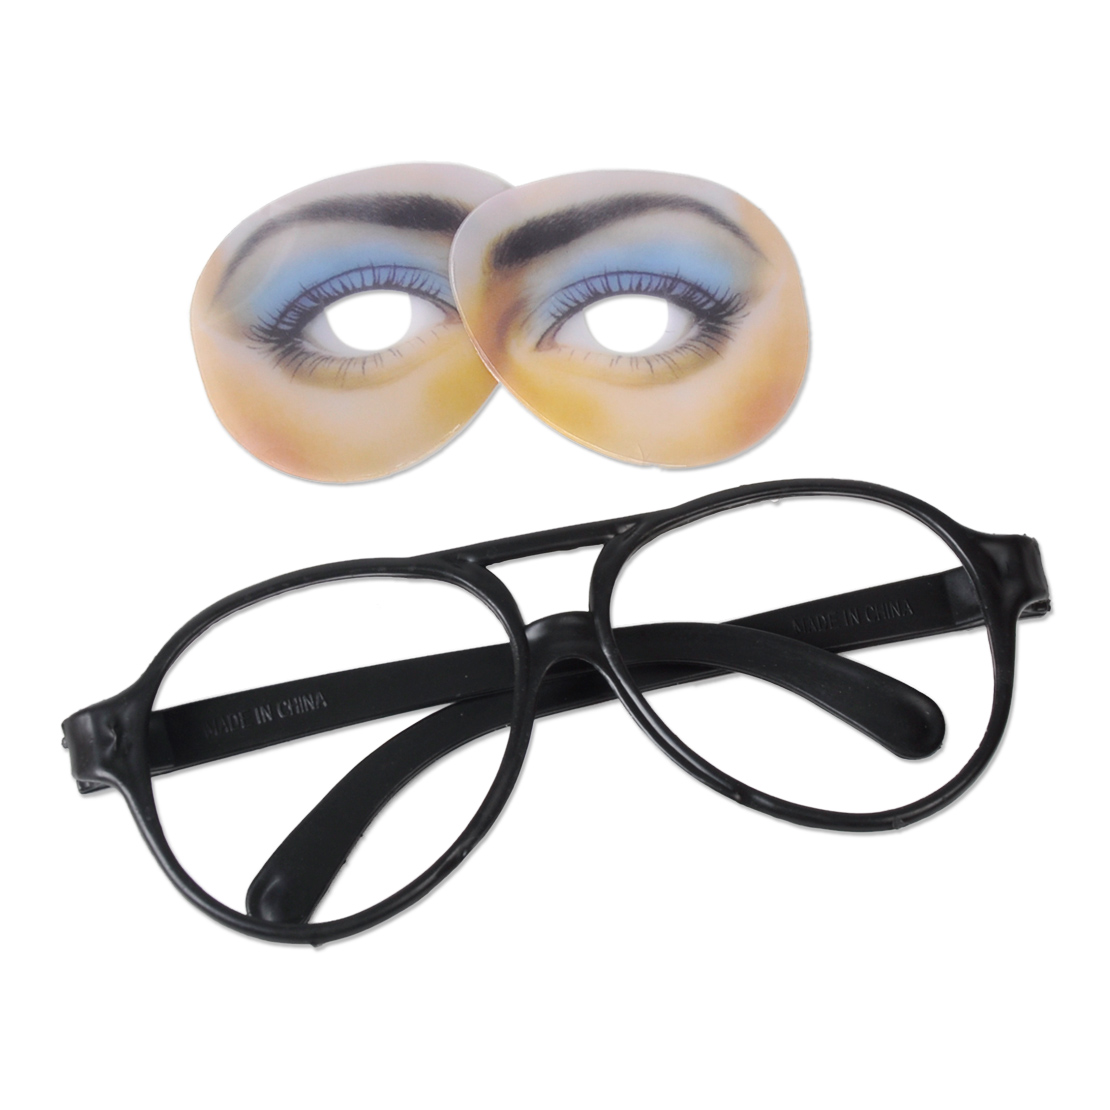 Unisex Funny Glasses Fake Novelty Gag Prank Eye Ball Joke Toy Halloween 